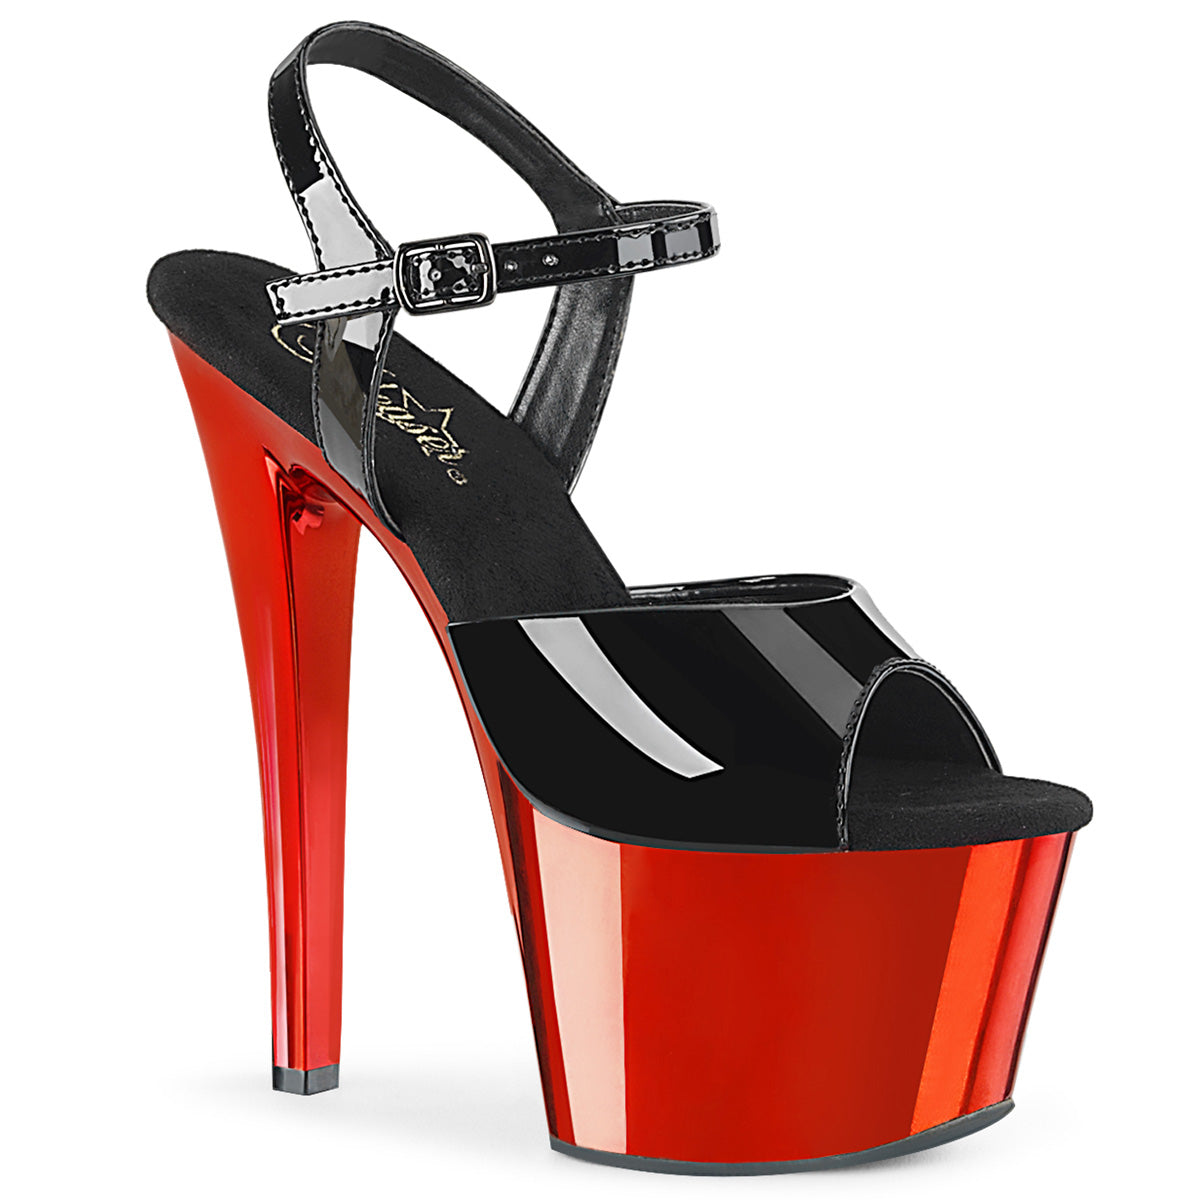 Pleaser Womens Sandals SKY-309 Blk Pat/Red Chrome